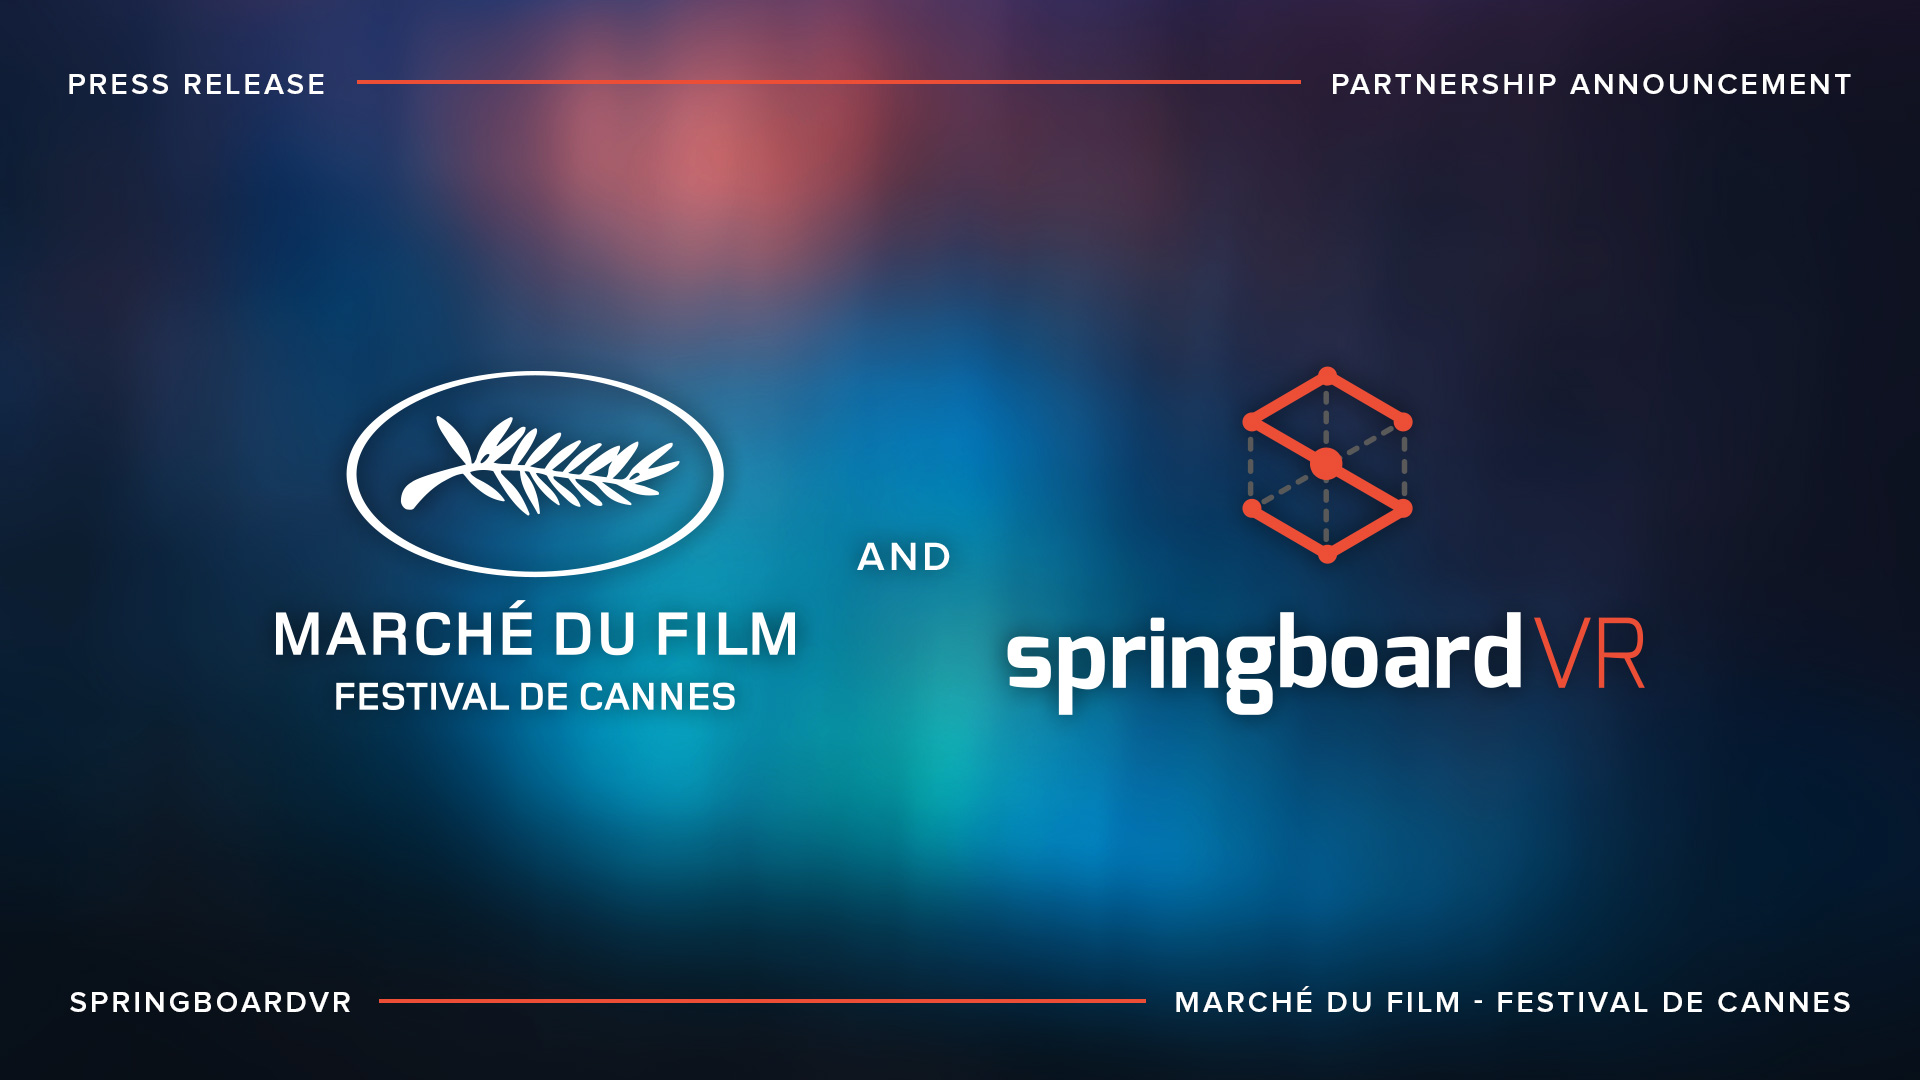 Marché du Film SpringboardVR Partnership